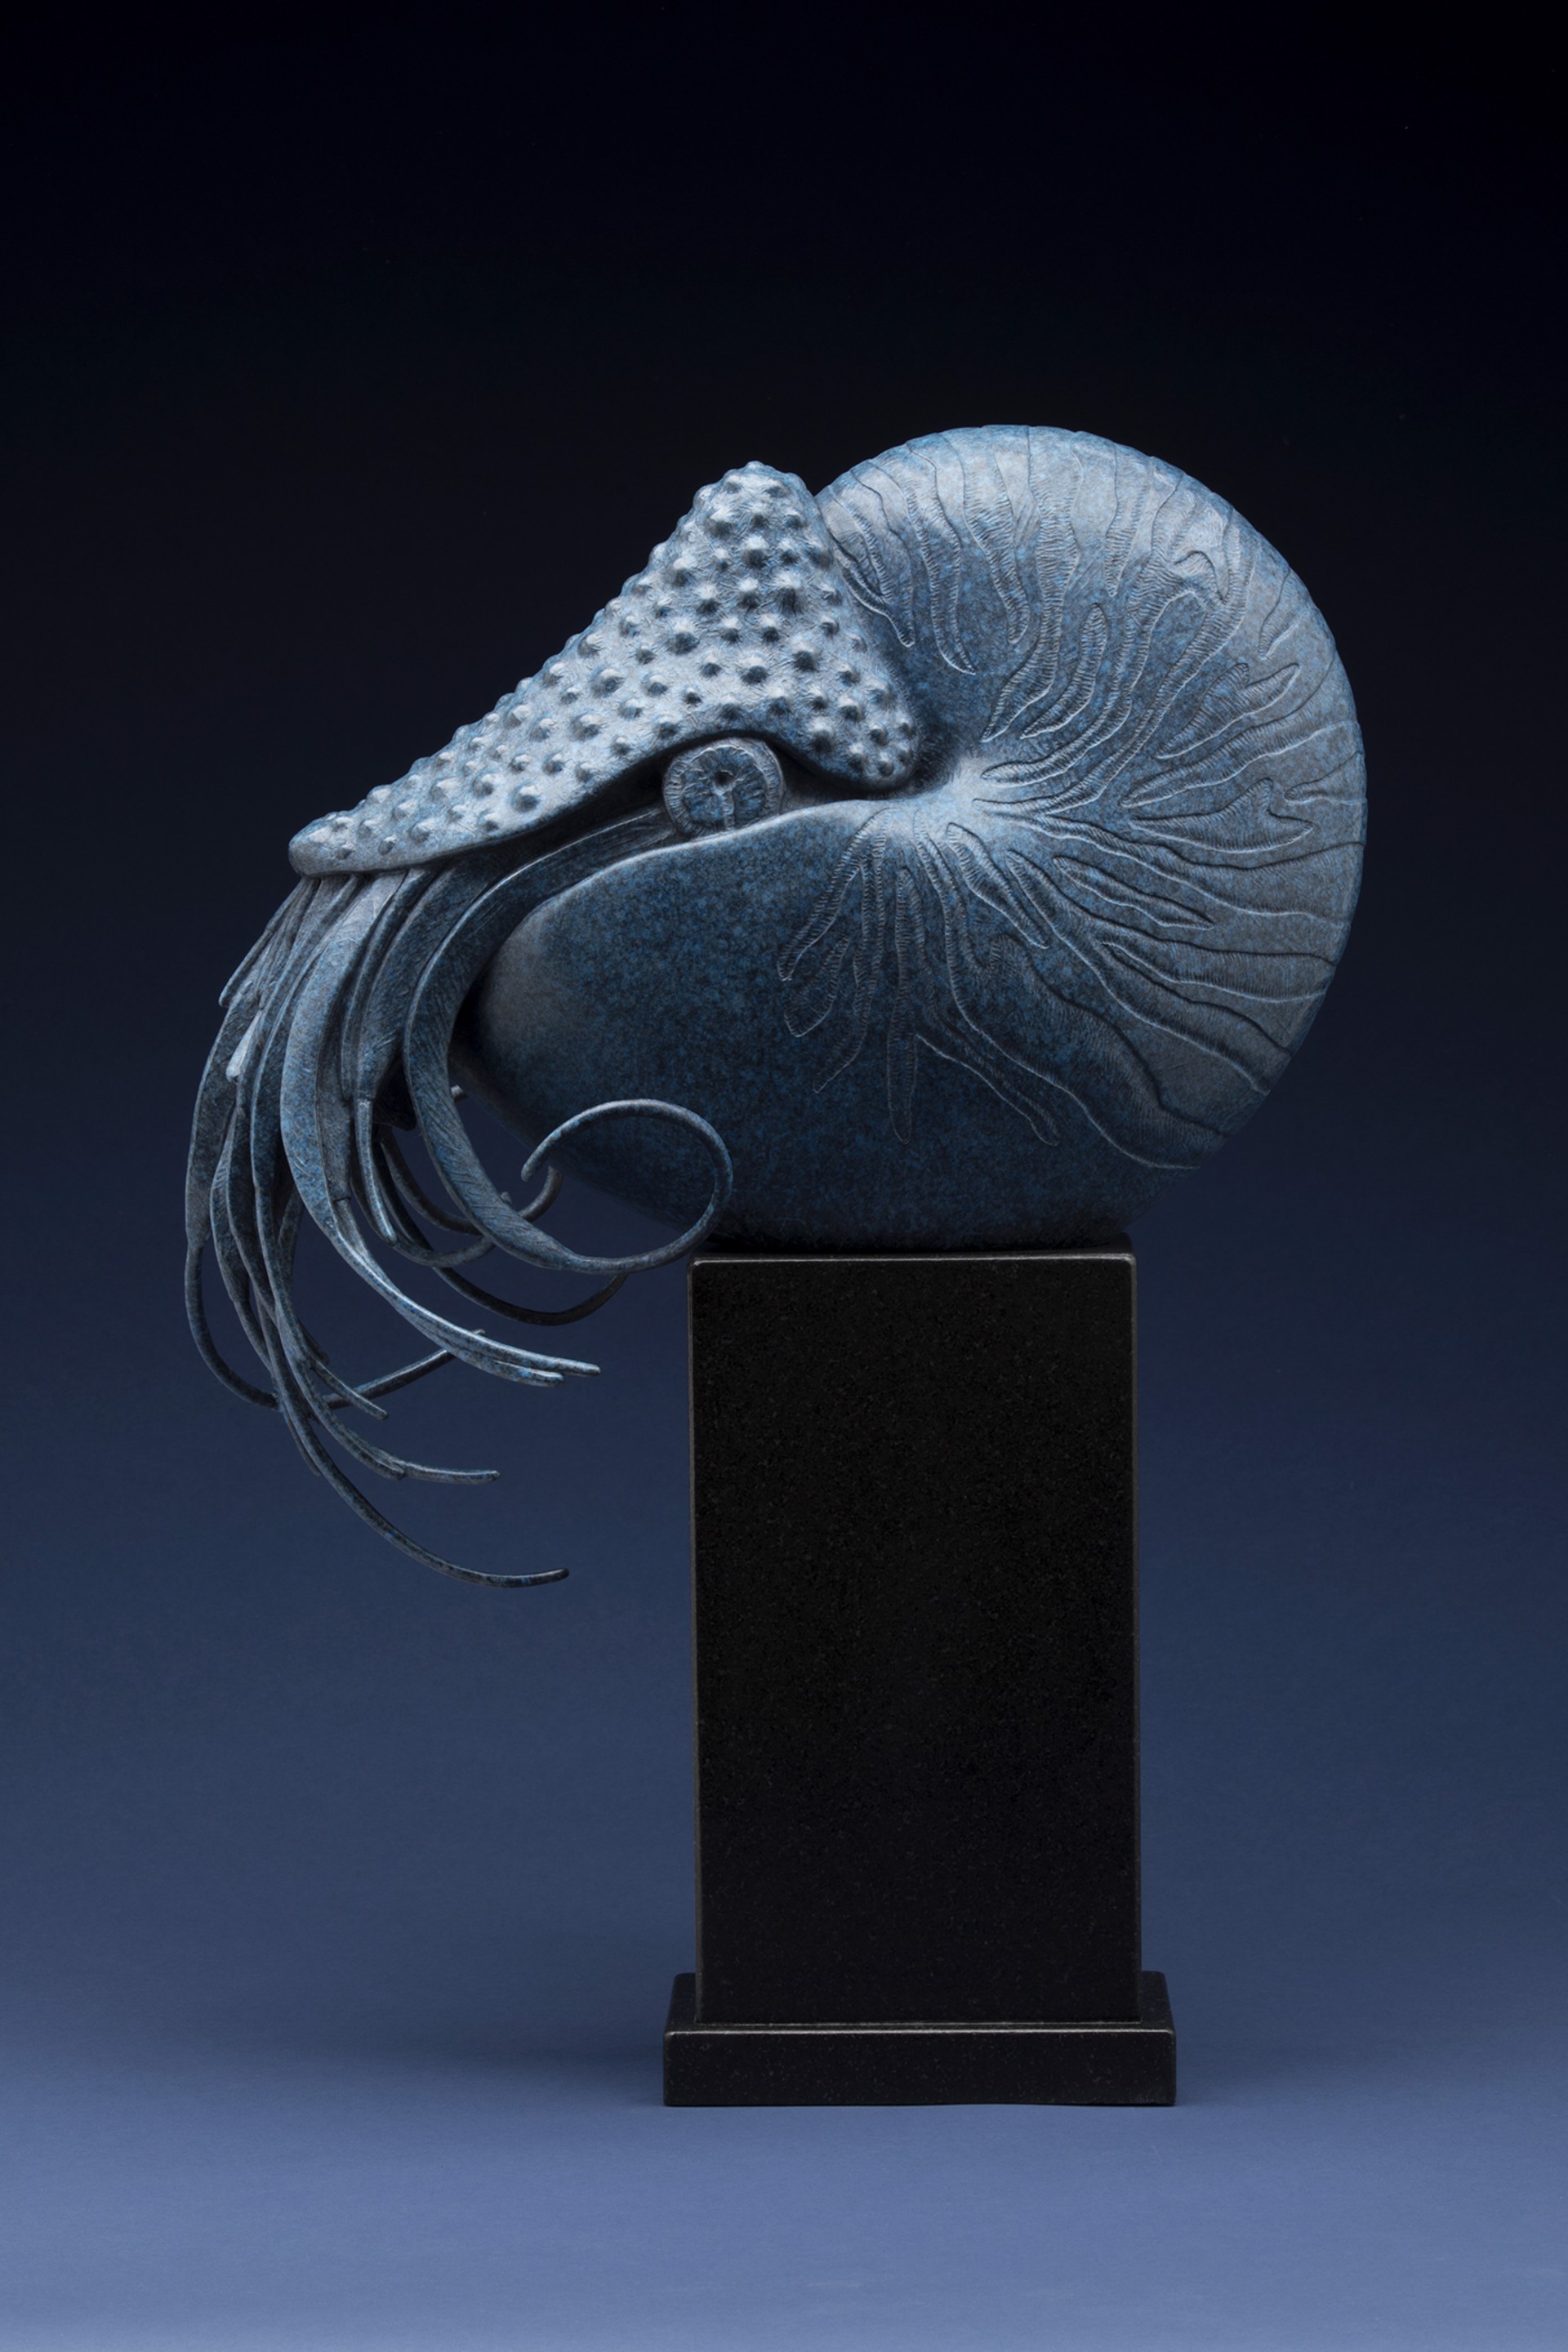 Nautilus by Tony Hochstetler